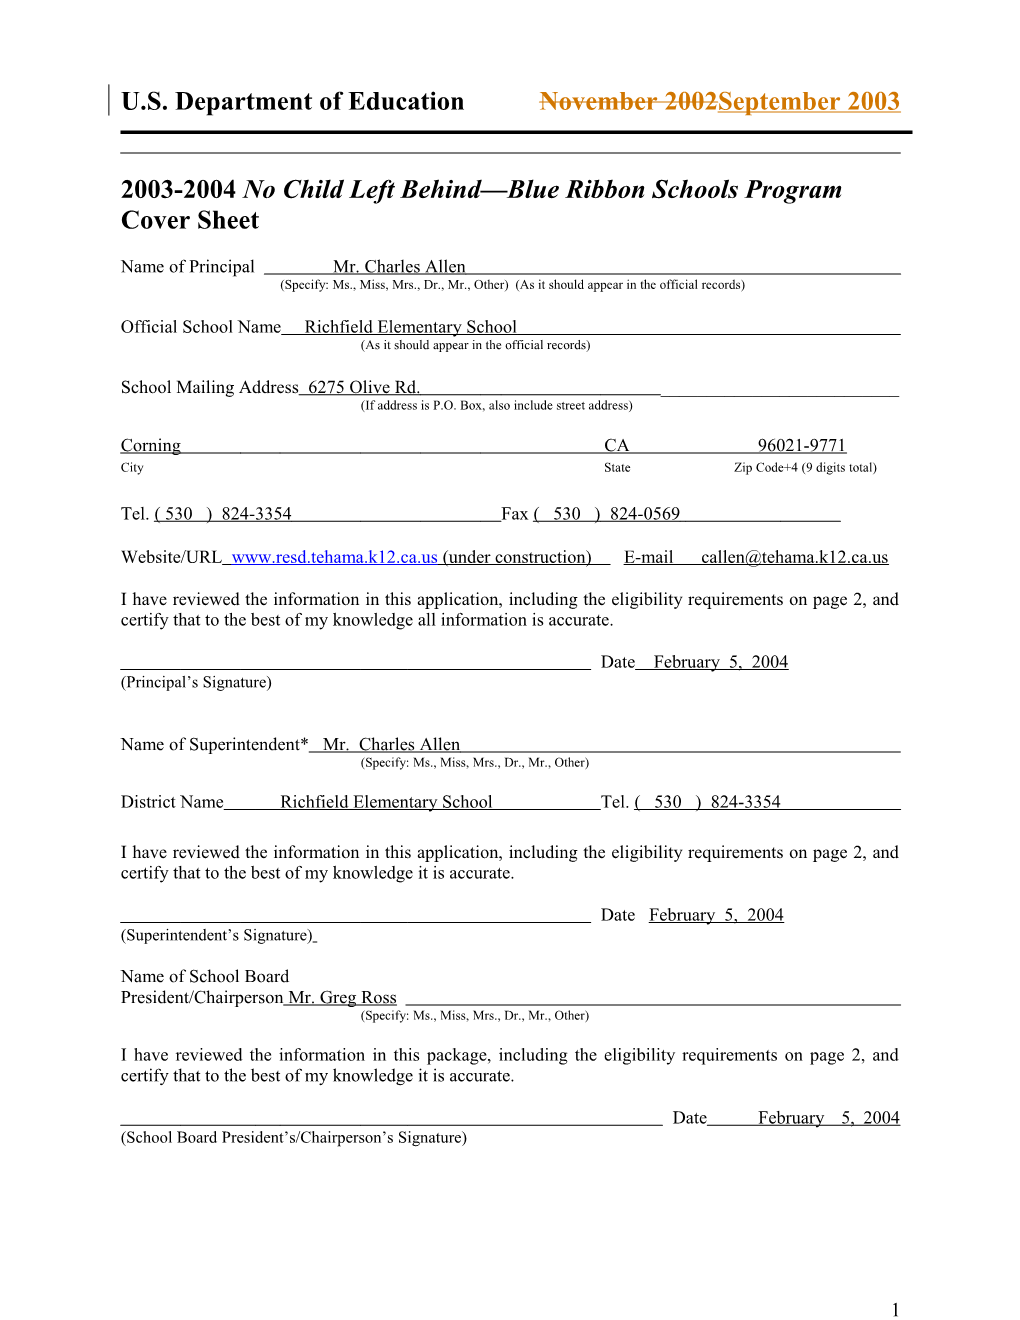 Richfield Elementary School 2004 No Child Left Behind-Blue Ribbon School Application (Msword)